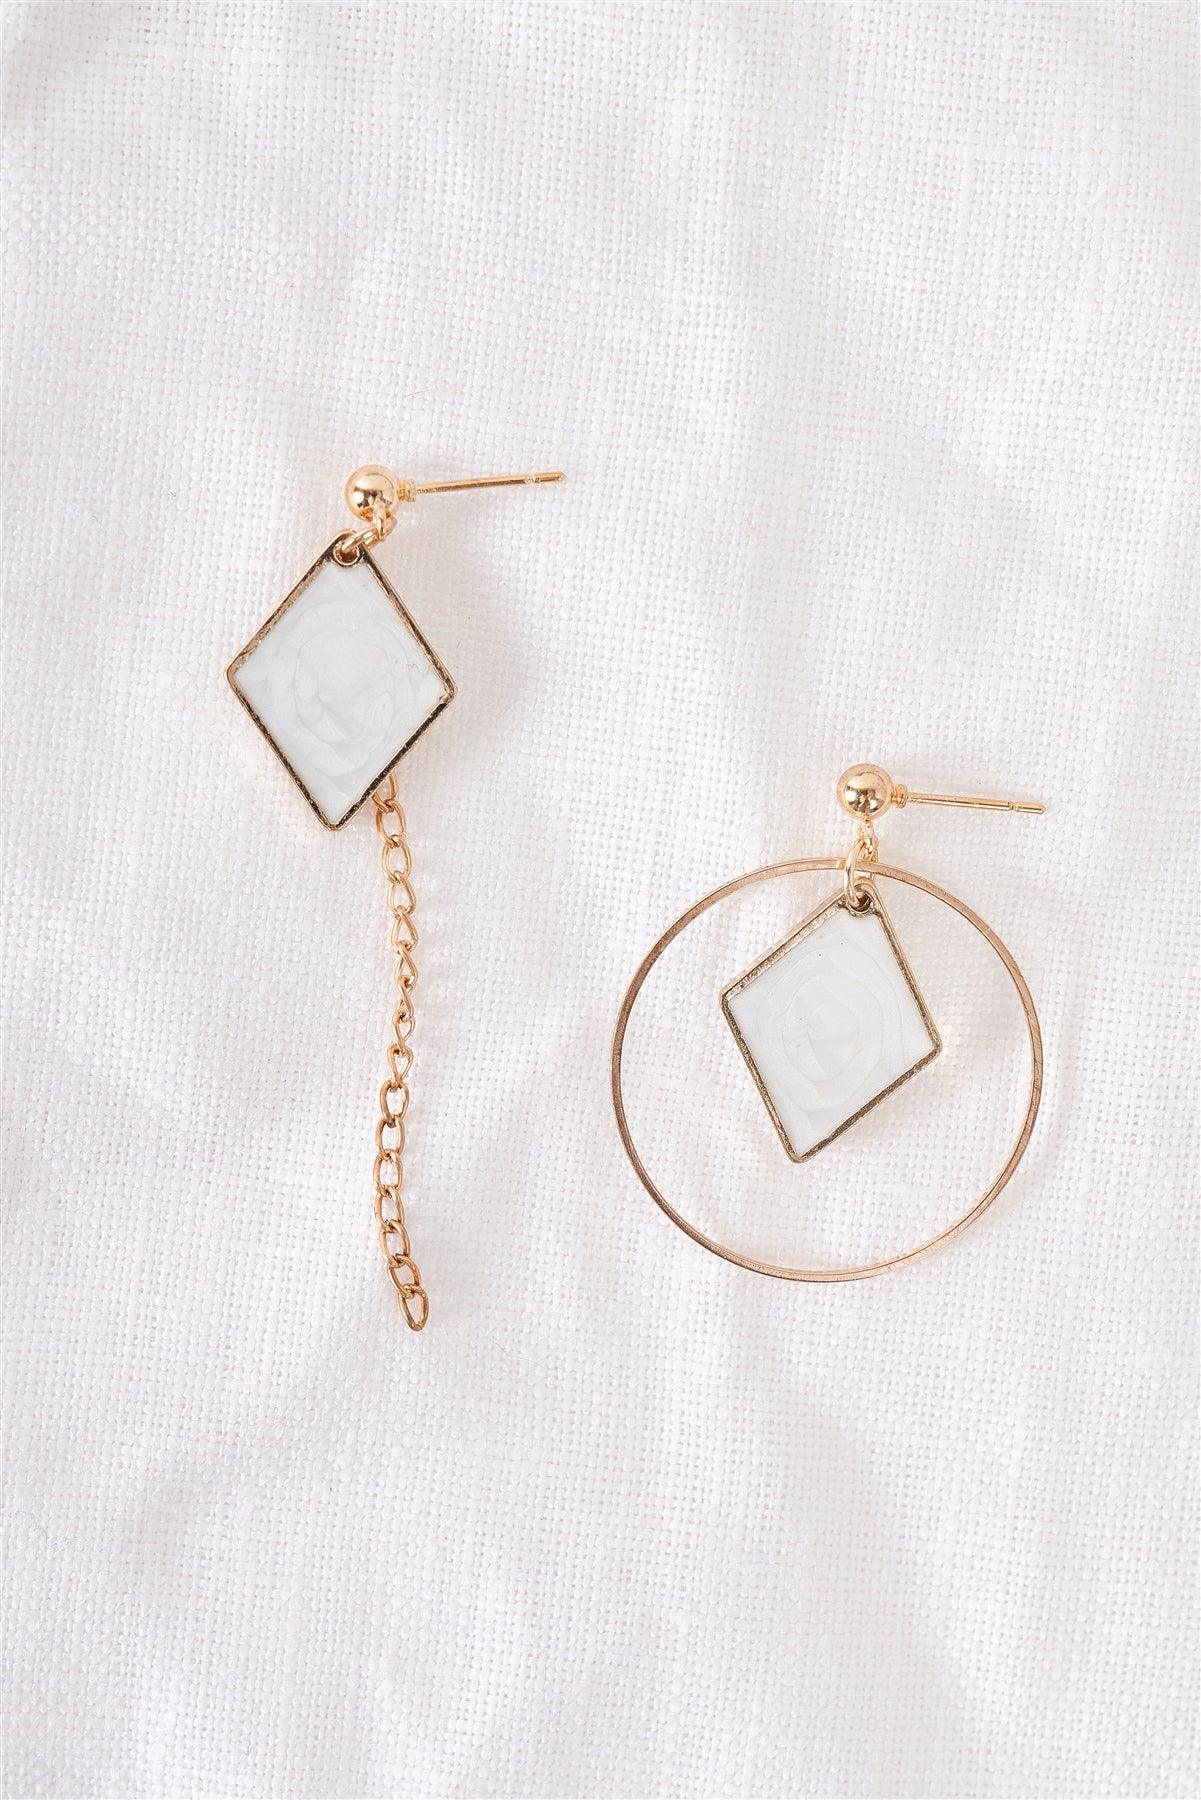 Gold & White Rhombus Asymmetrical Earrings / 3 Pairs